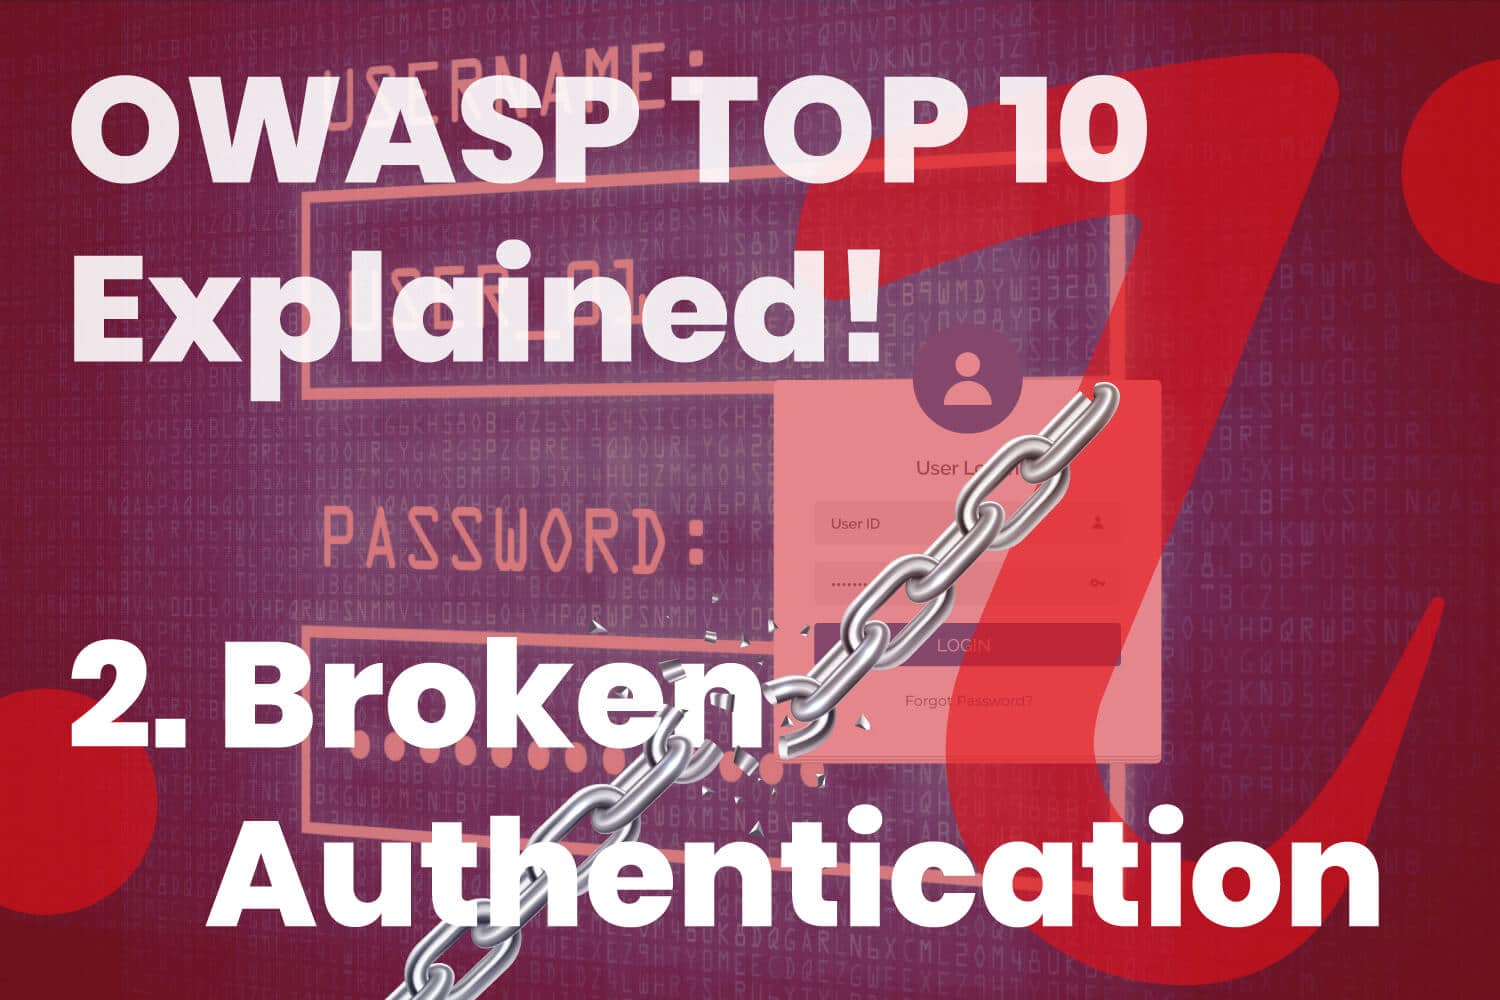 OWASP TOP 10 Explained: Broken Authentication